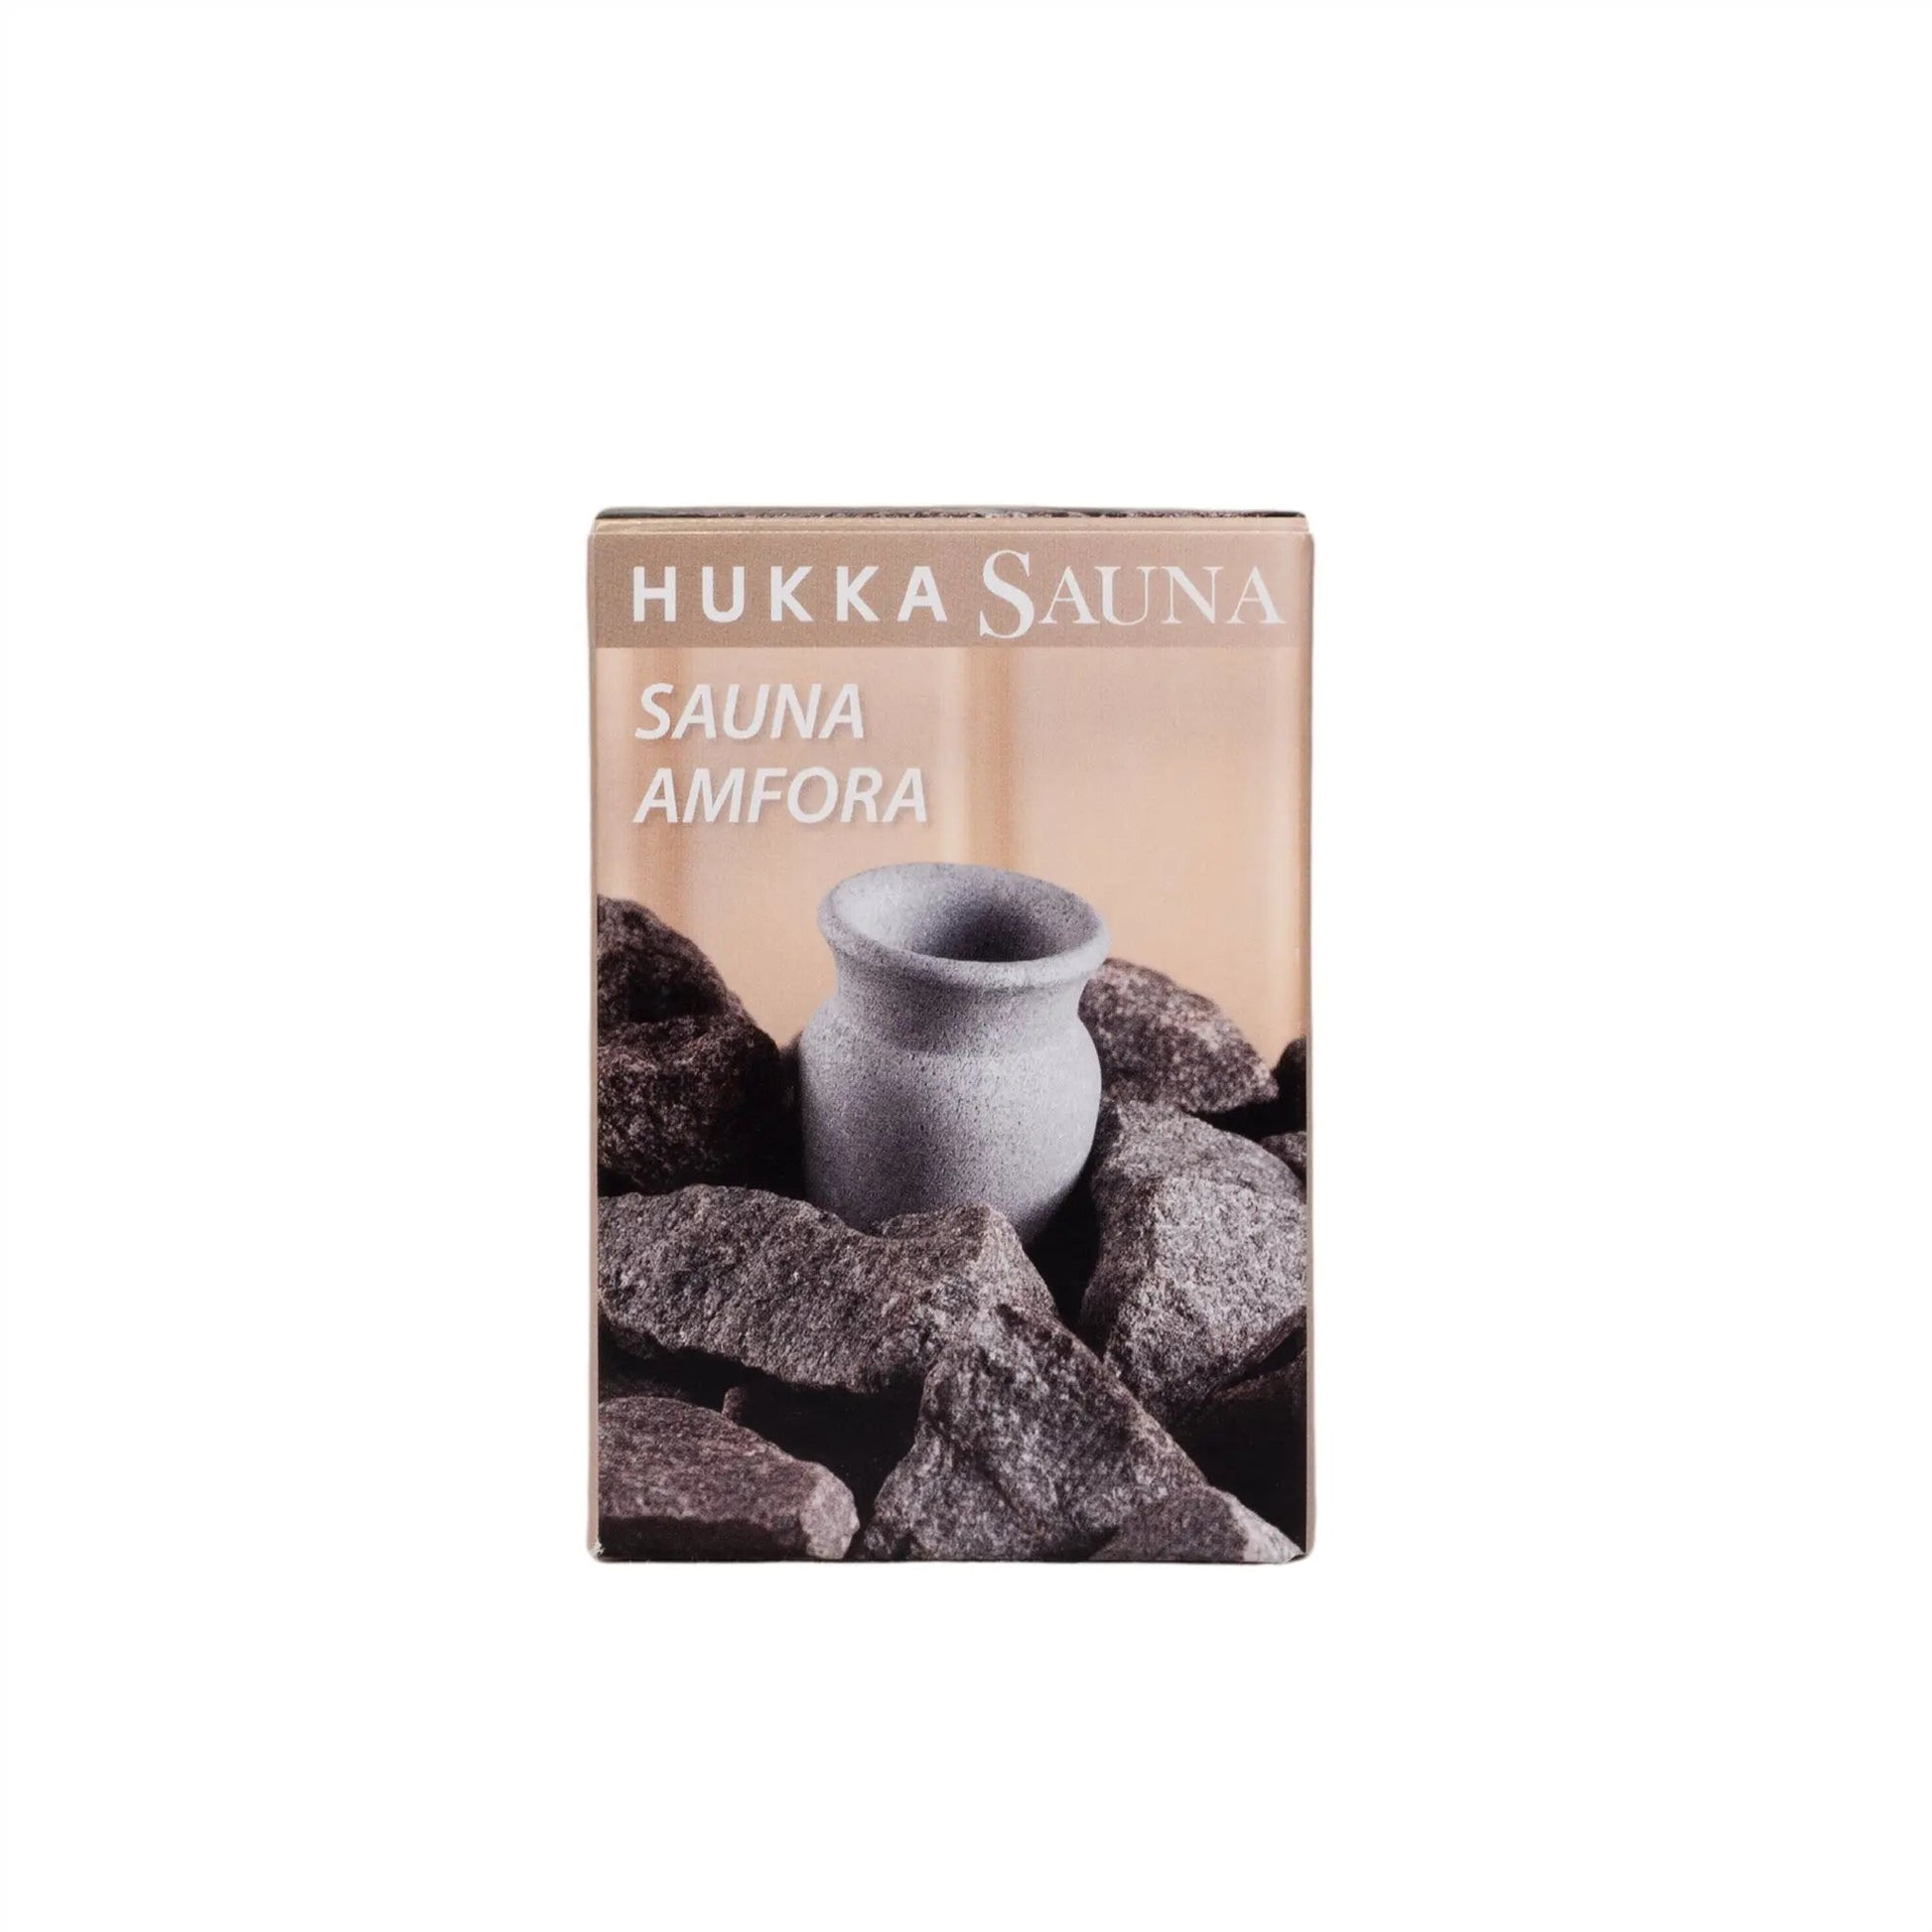 Finnish Soapstone Sauna Amphora Scent Oil Diffuser - Sauna Amfora Soapstone Scent Diffuser | Finnmark Sauna